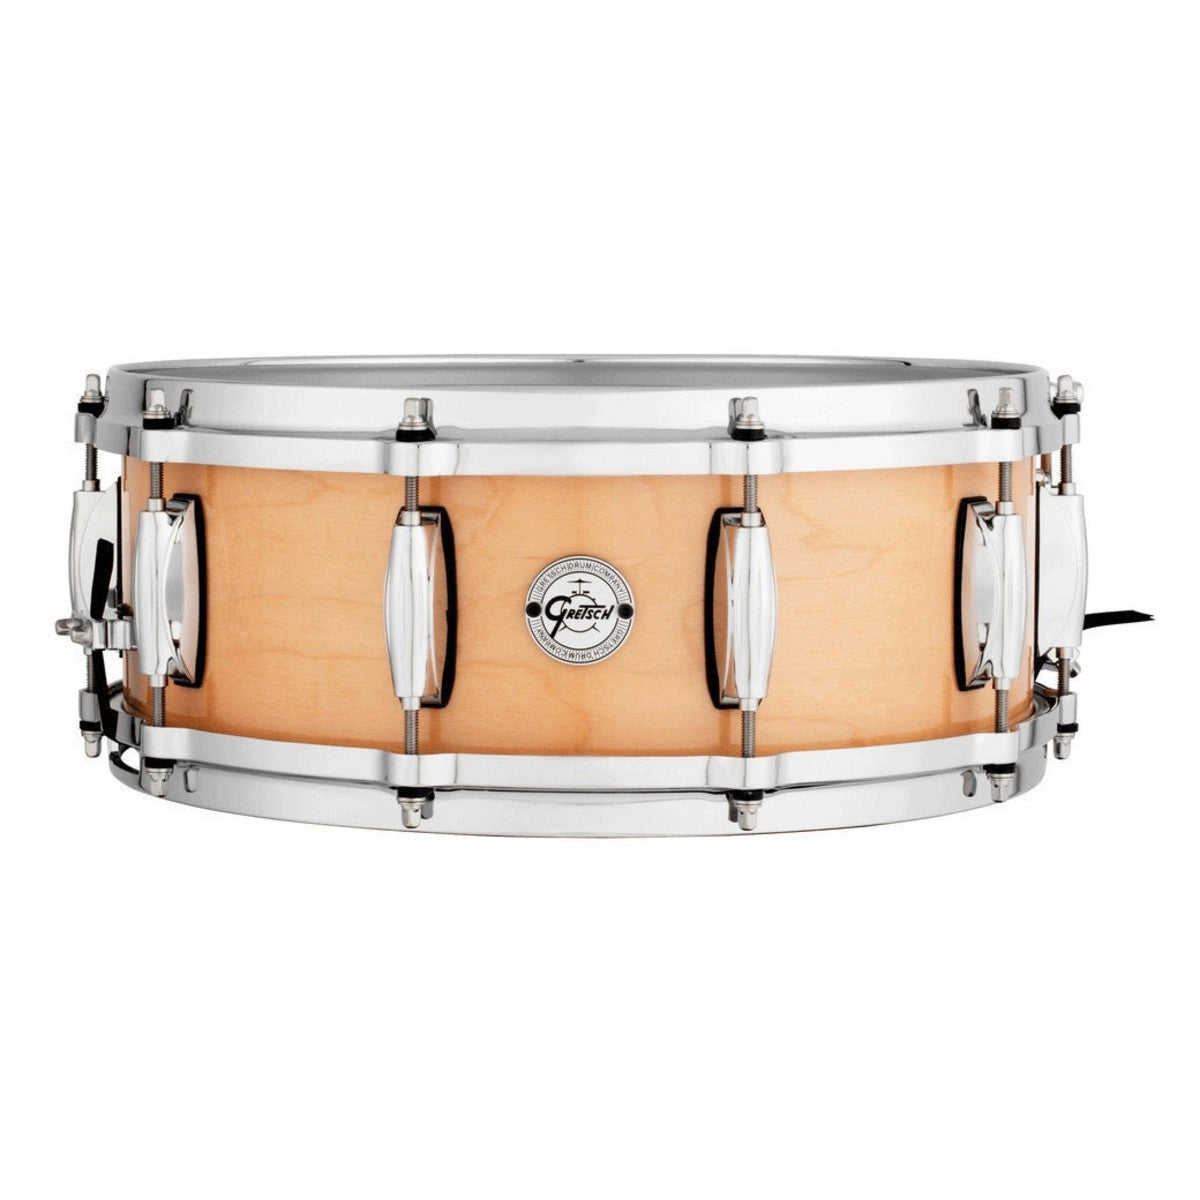 Gretsch "Full Range" 14"x5" Maple Snare Drum